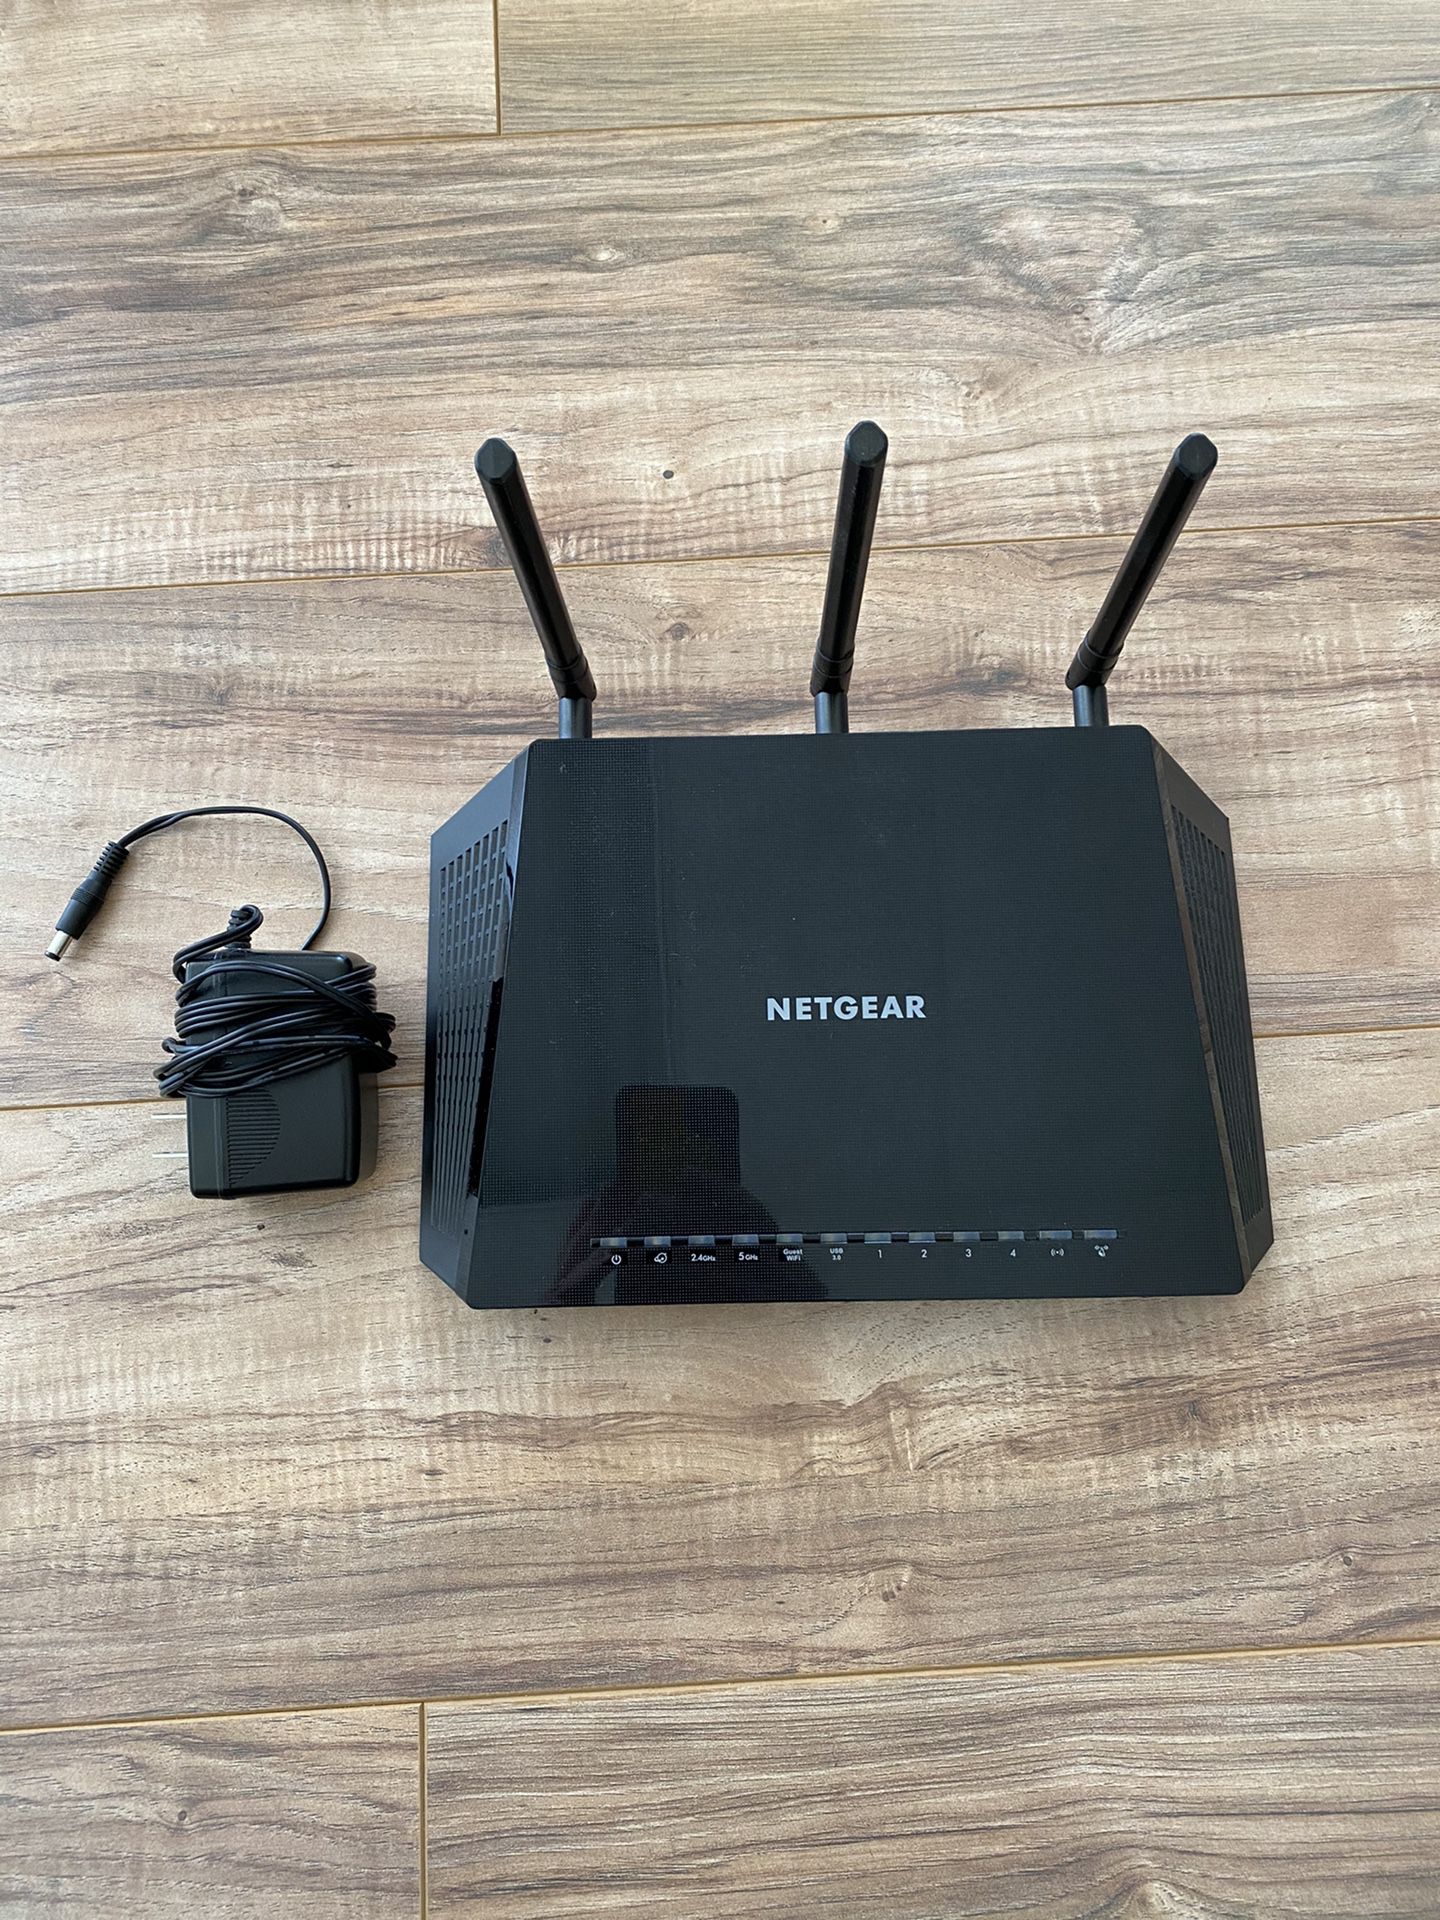 Netgear Nighthawk 1750 AC Wireless Router